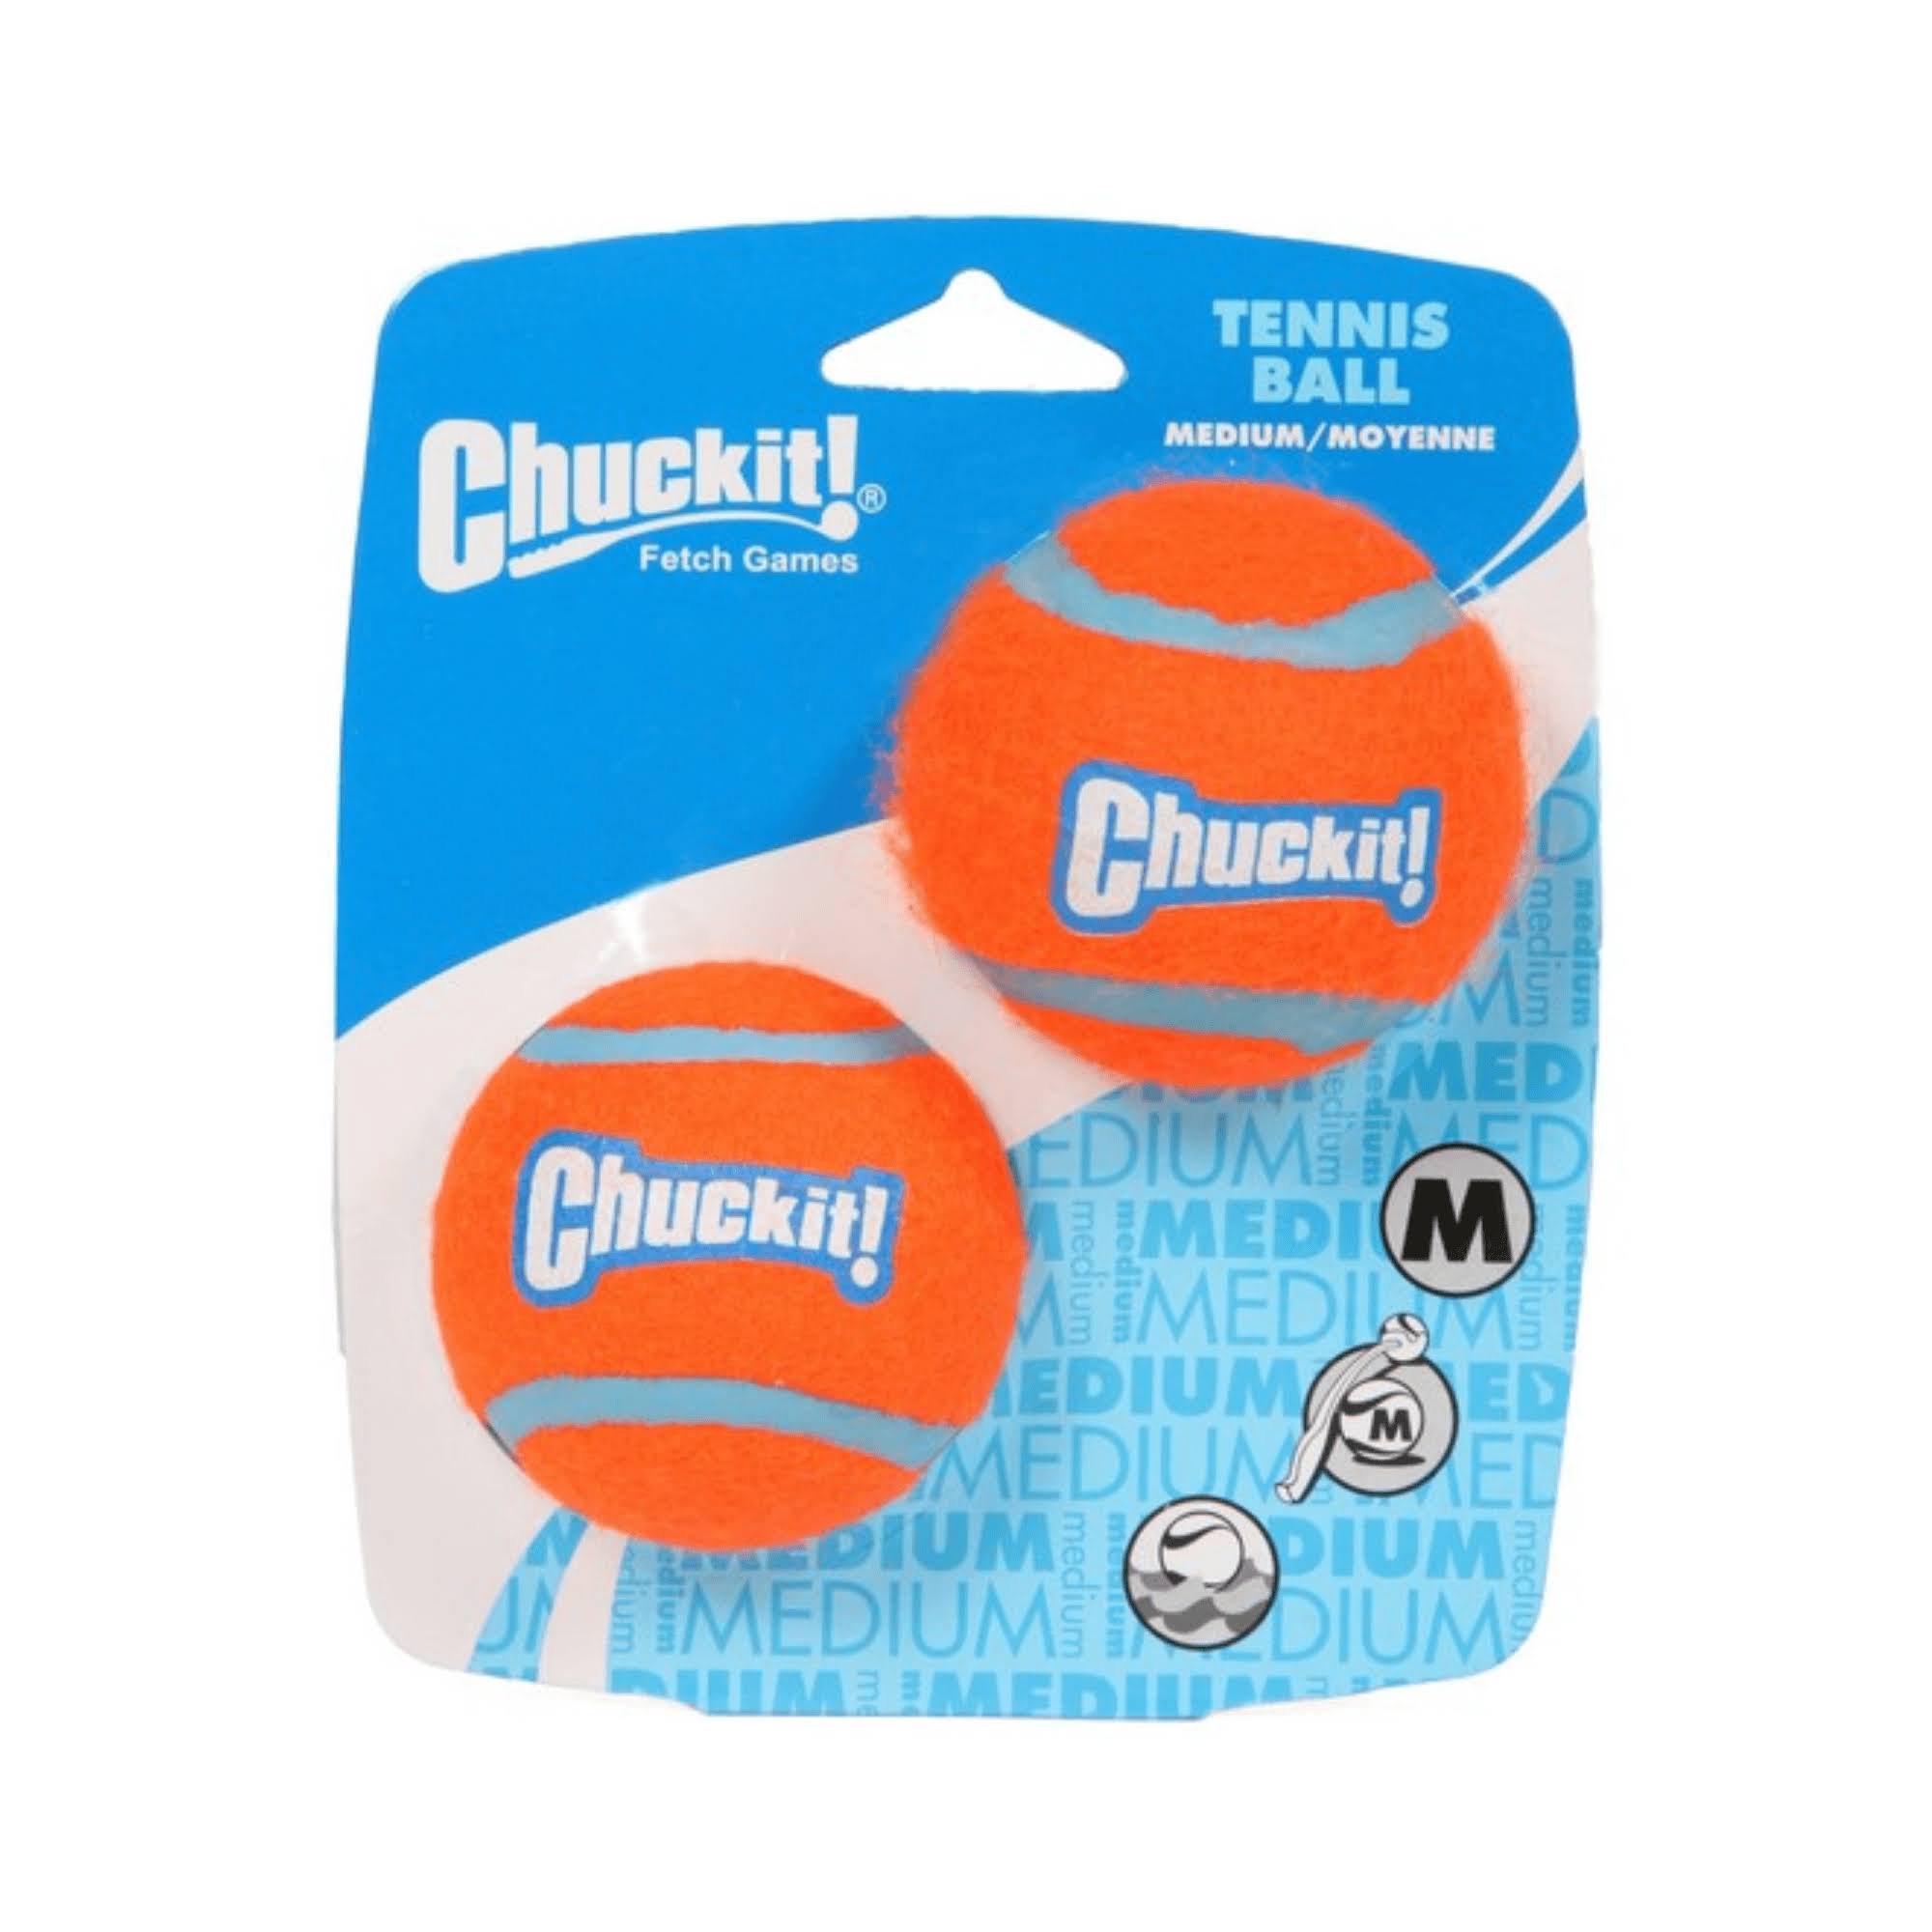 Chuckit Tennis Balls - Medium, x2